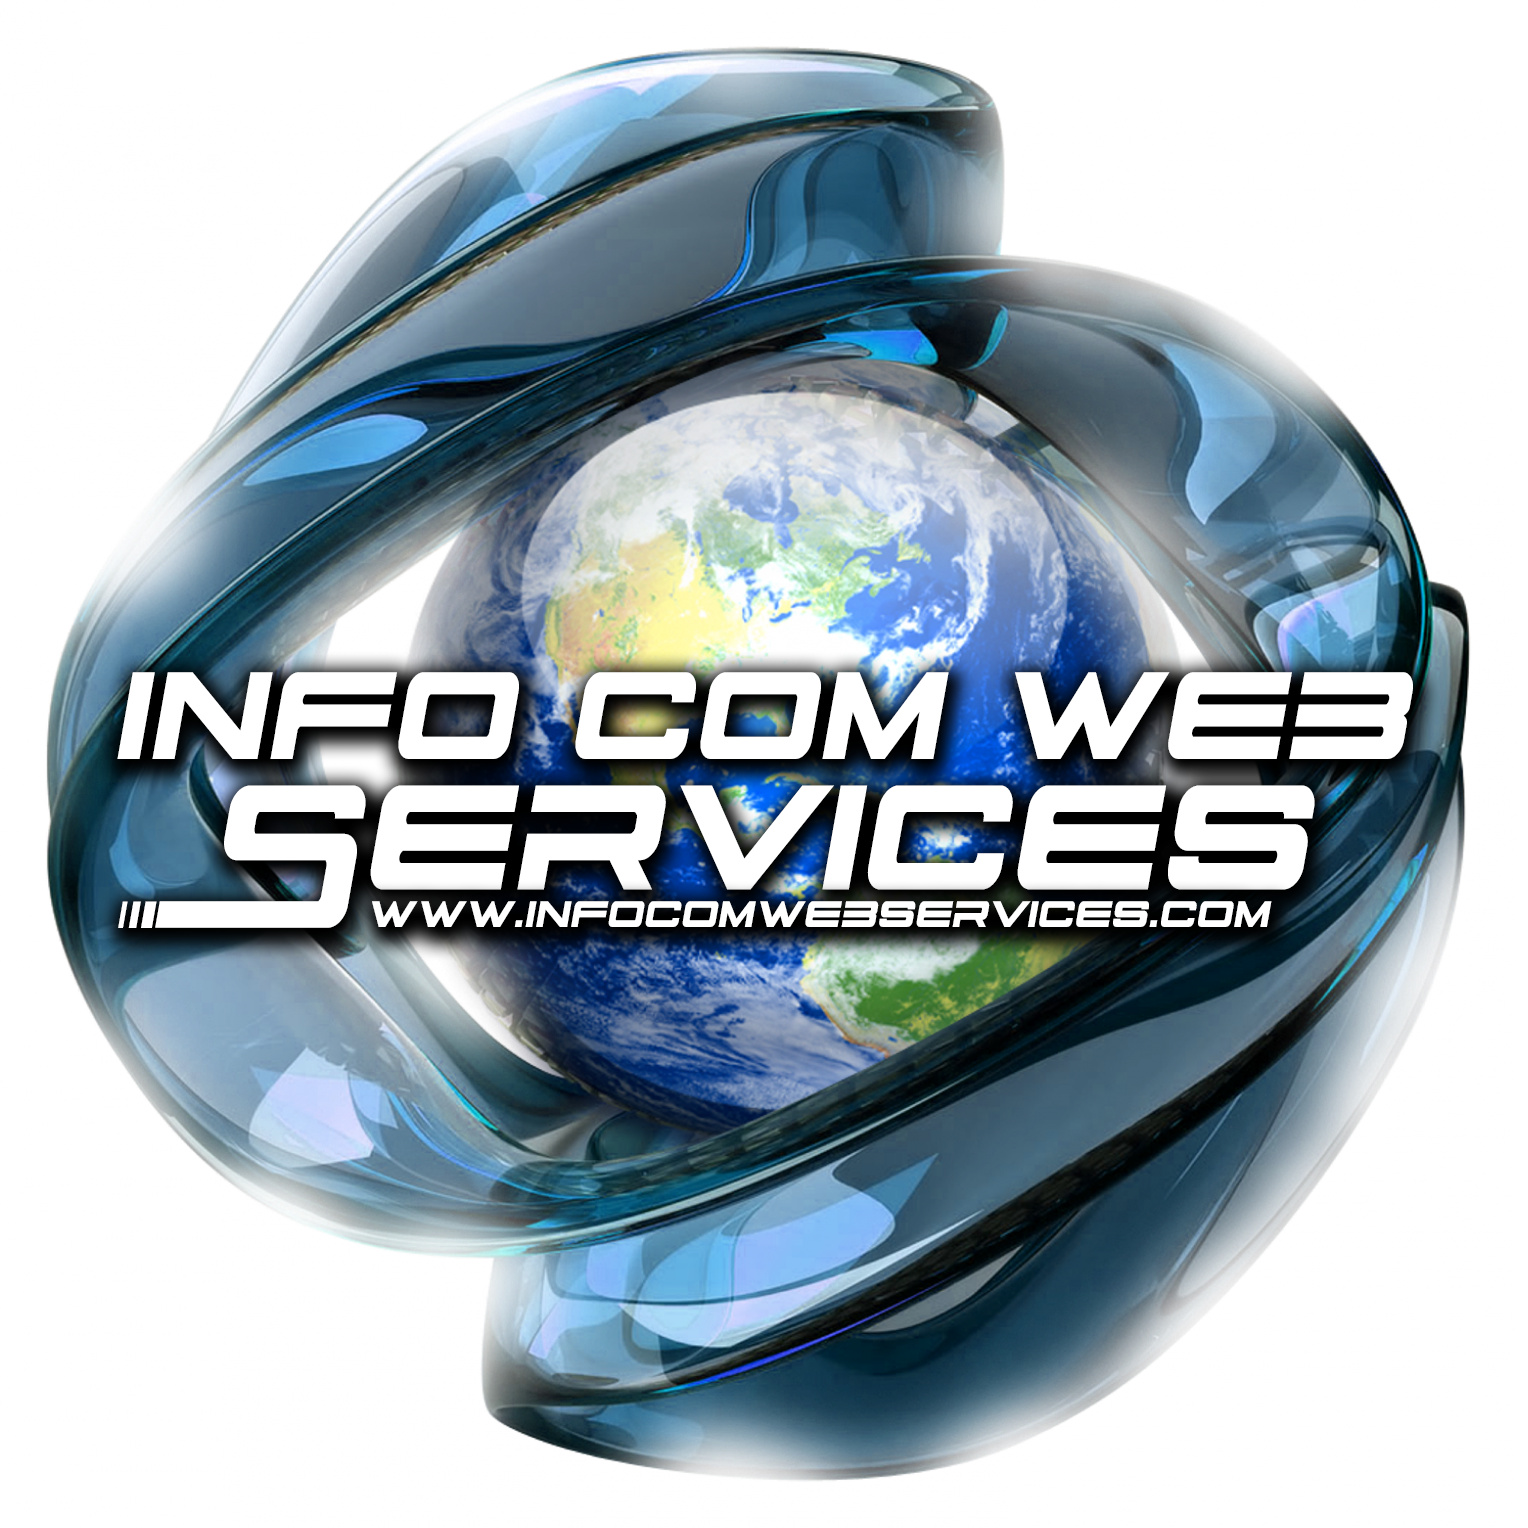 InfoComWeb Services